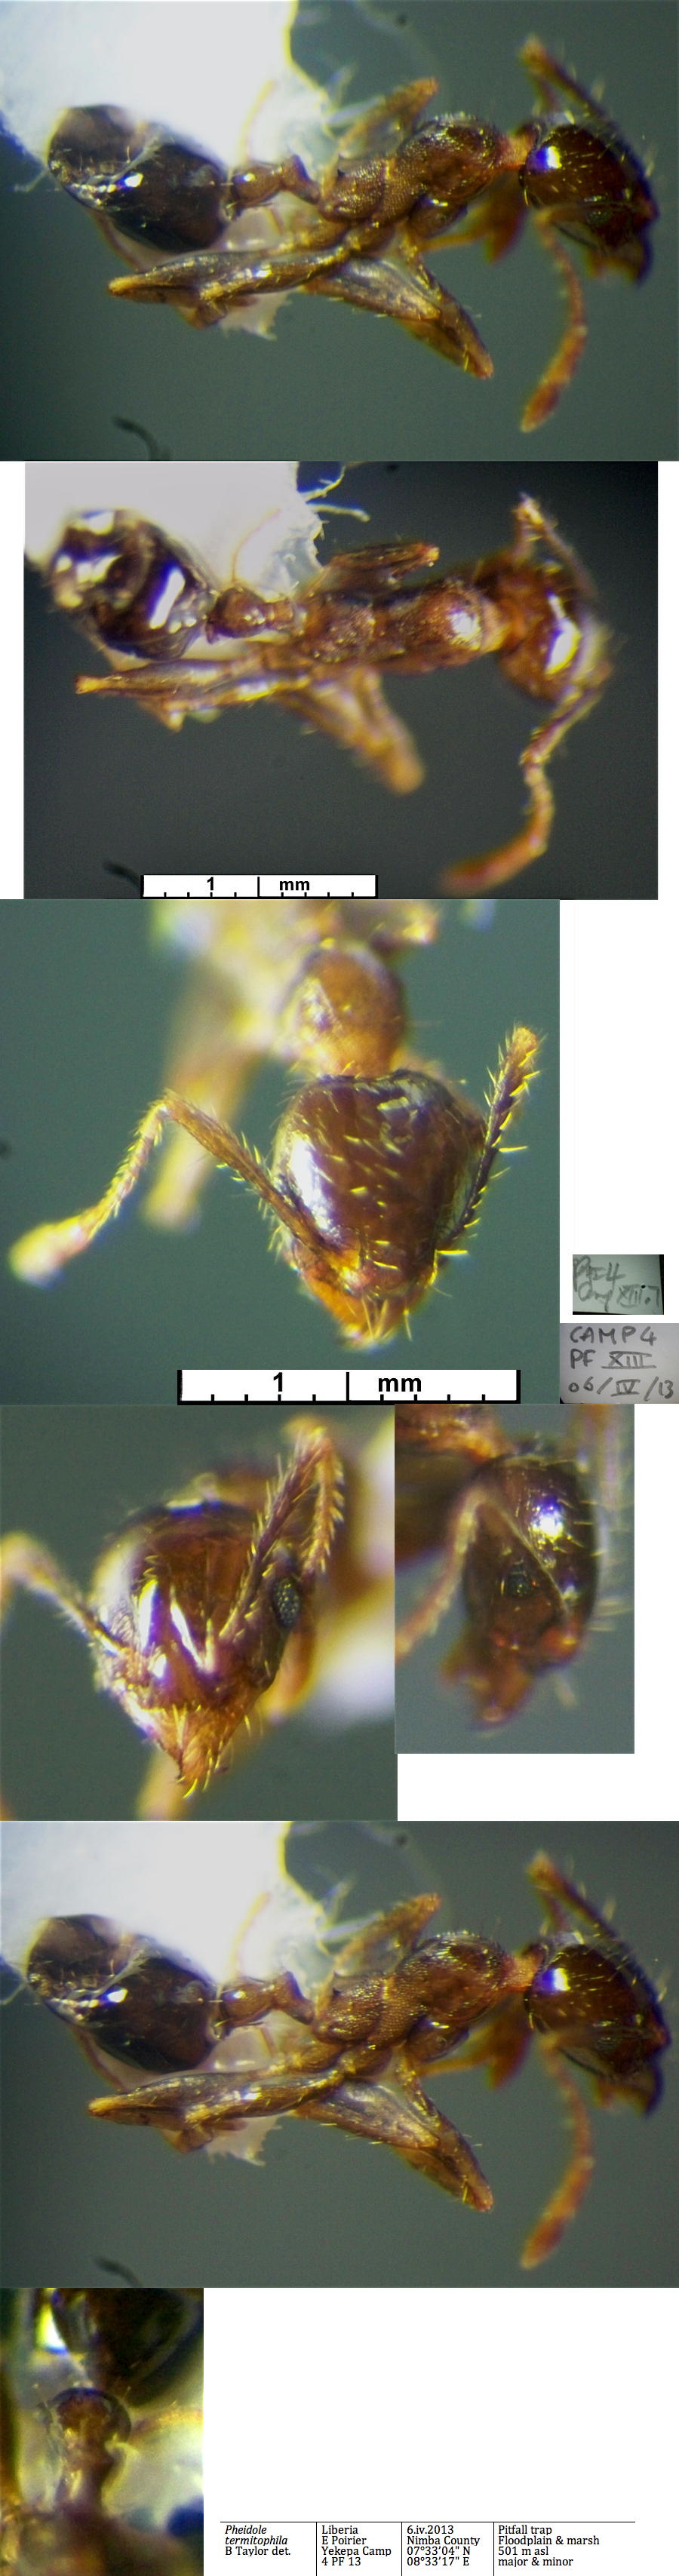 Pheidole termitophila minor